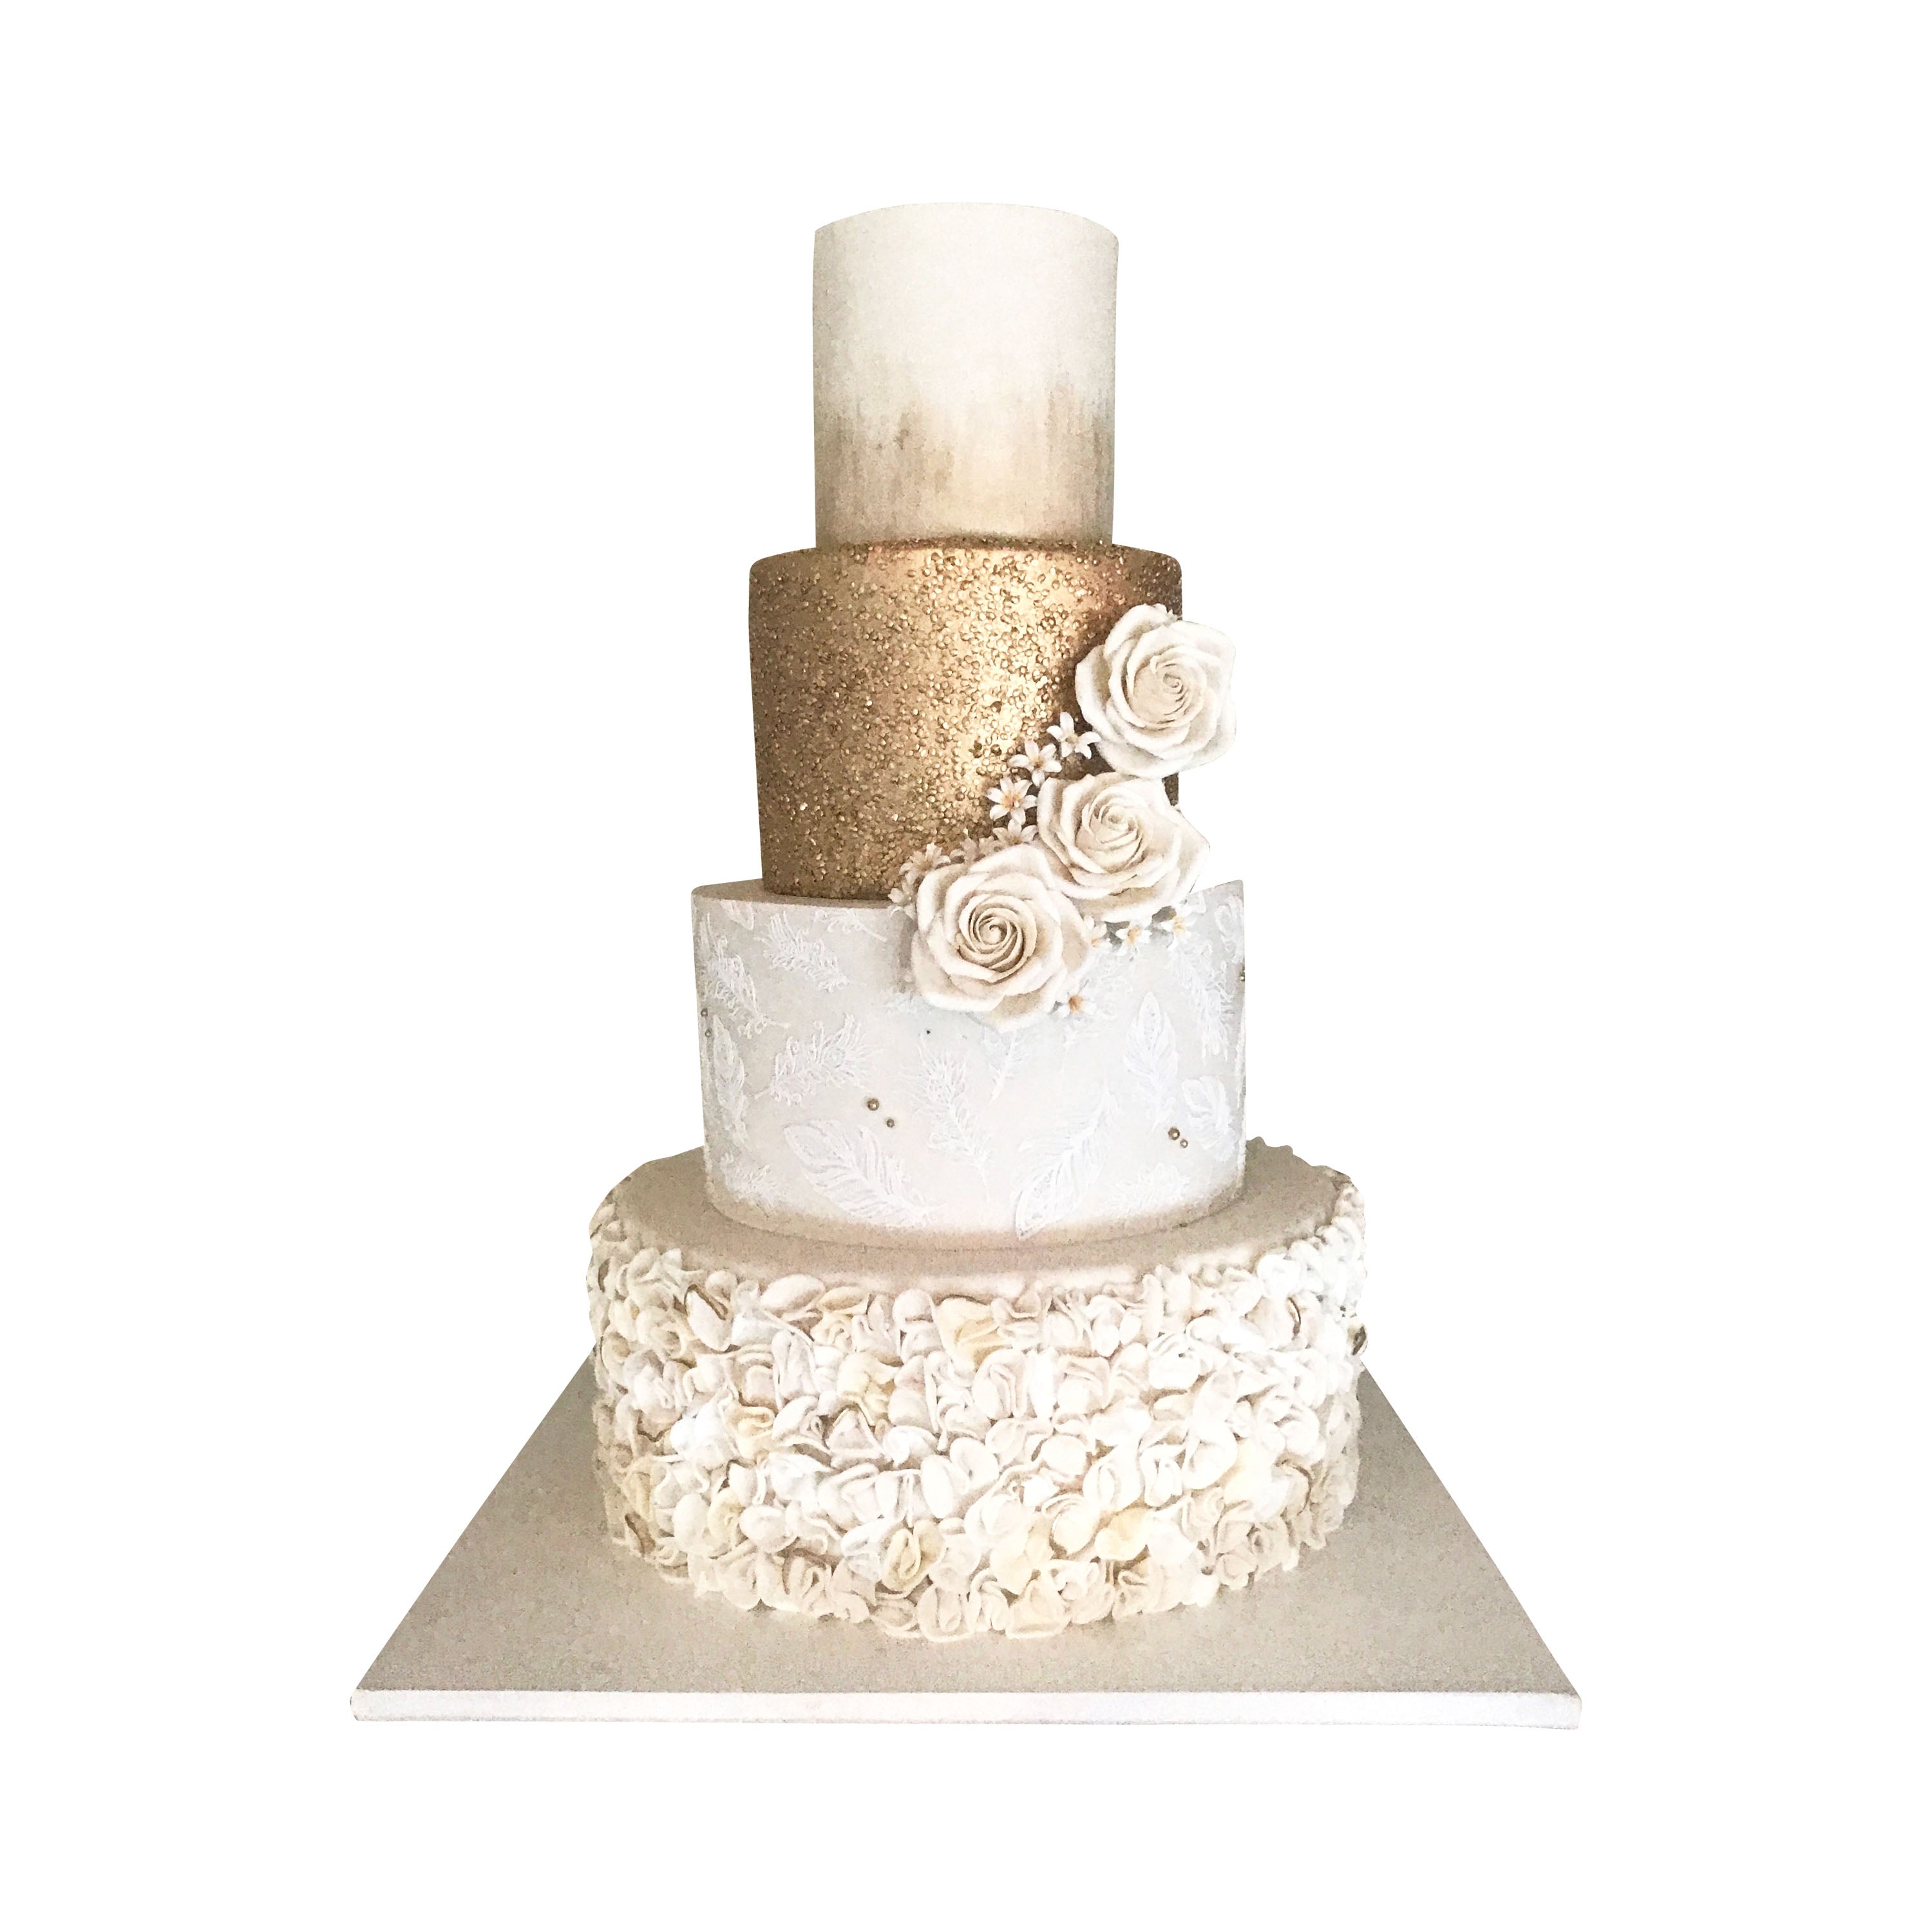 Buy Online Gold Leaf Wedding Cake - Budget Friendly | Harry Batten